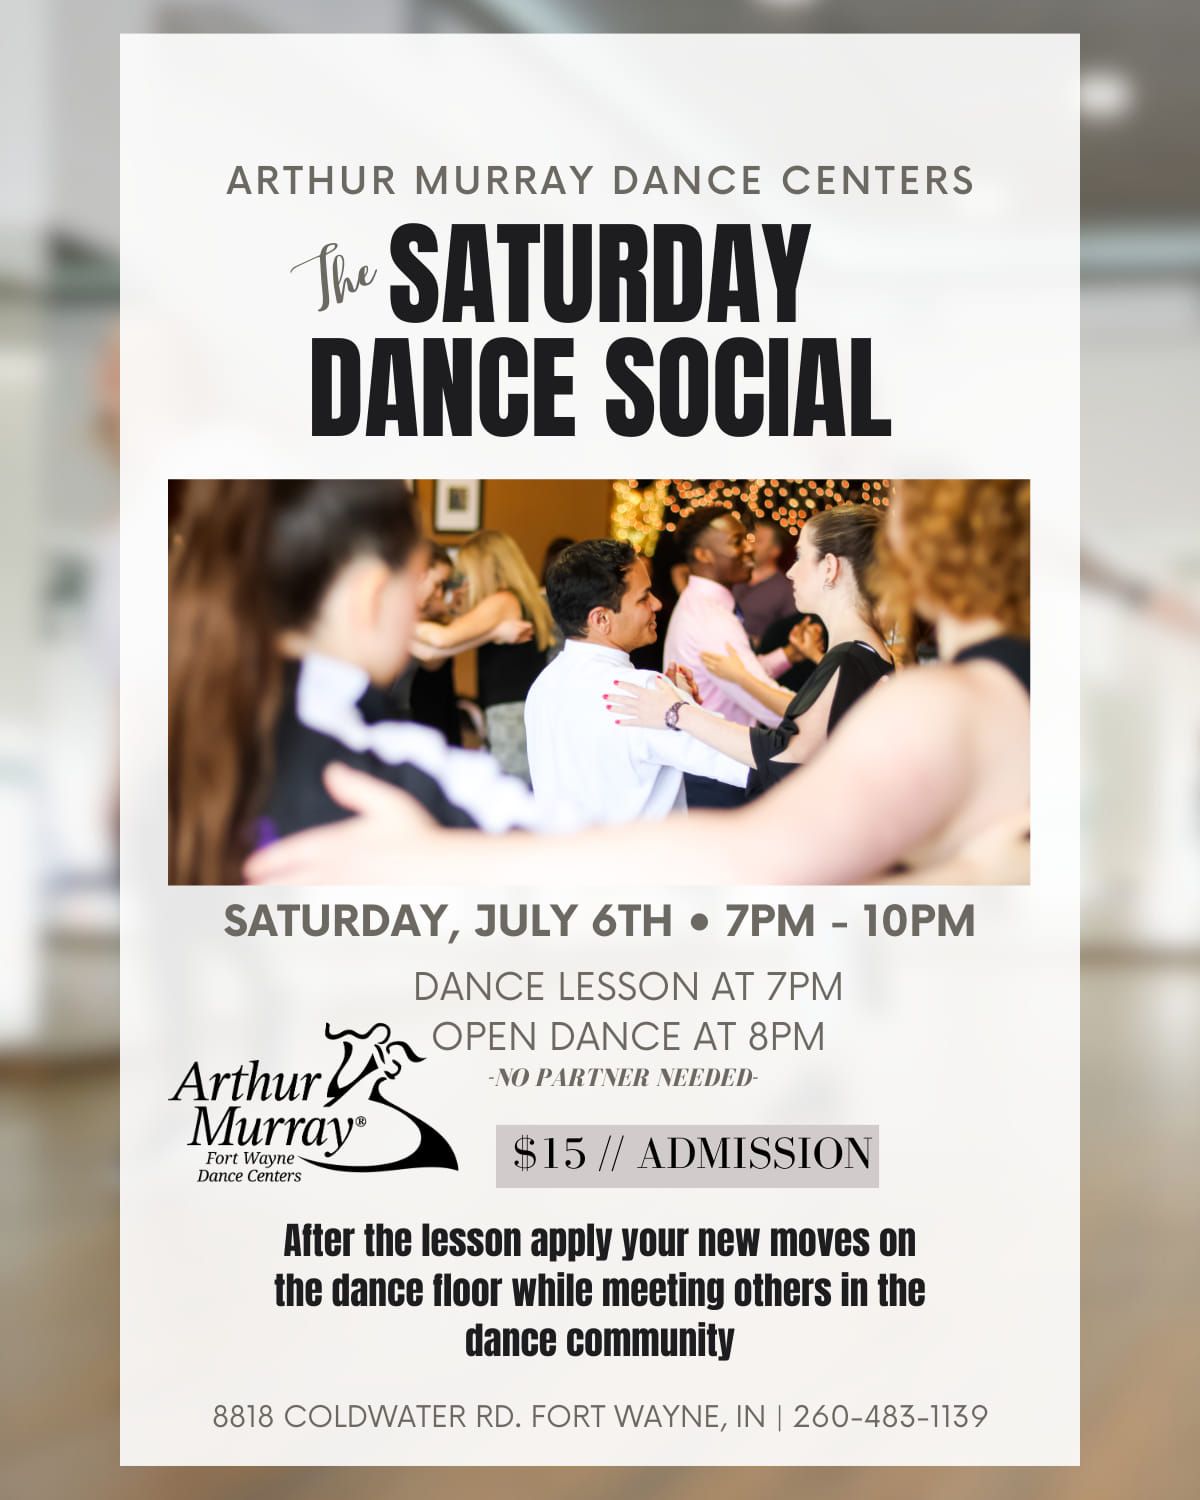 The Saturday Dance Social